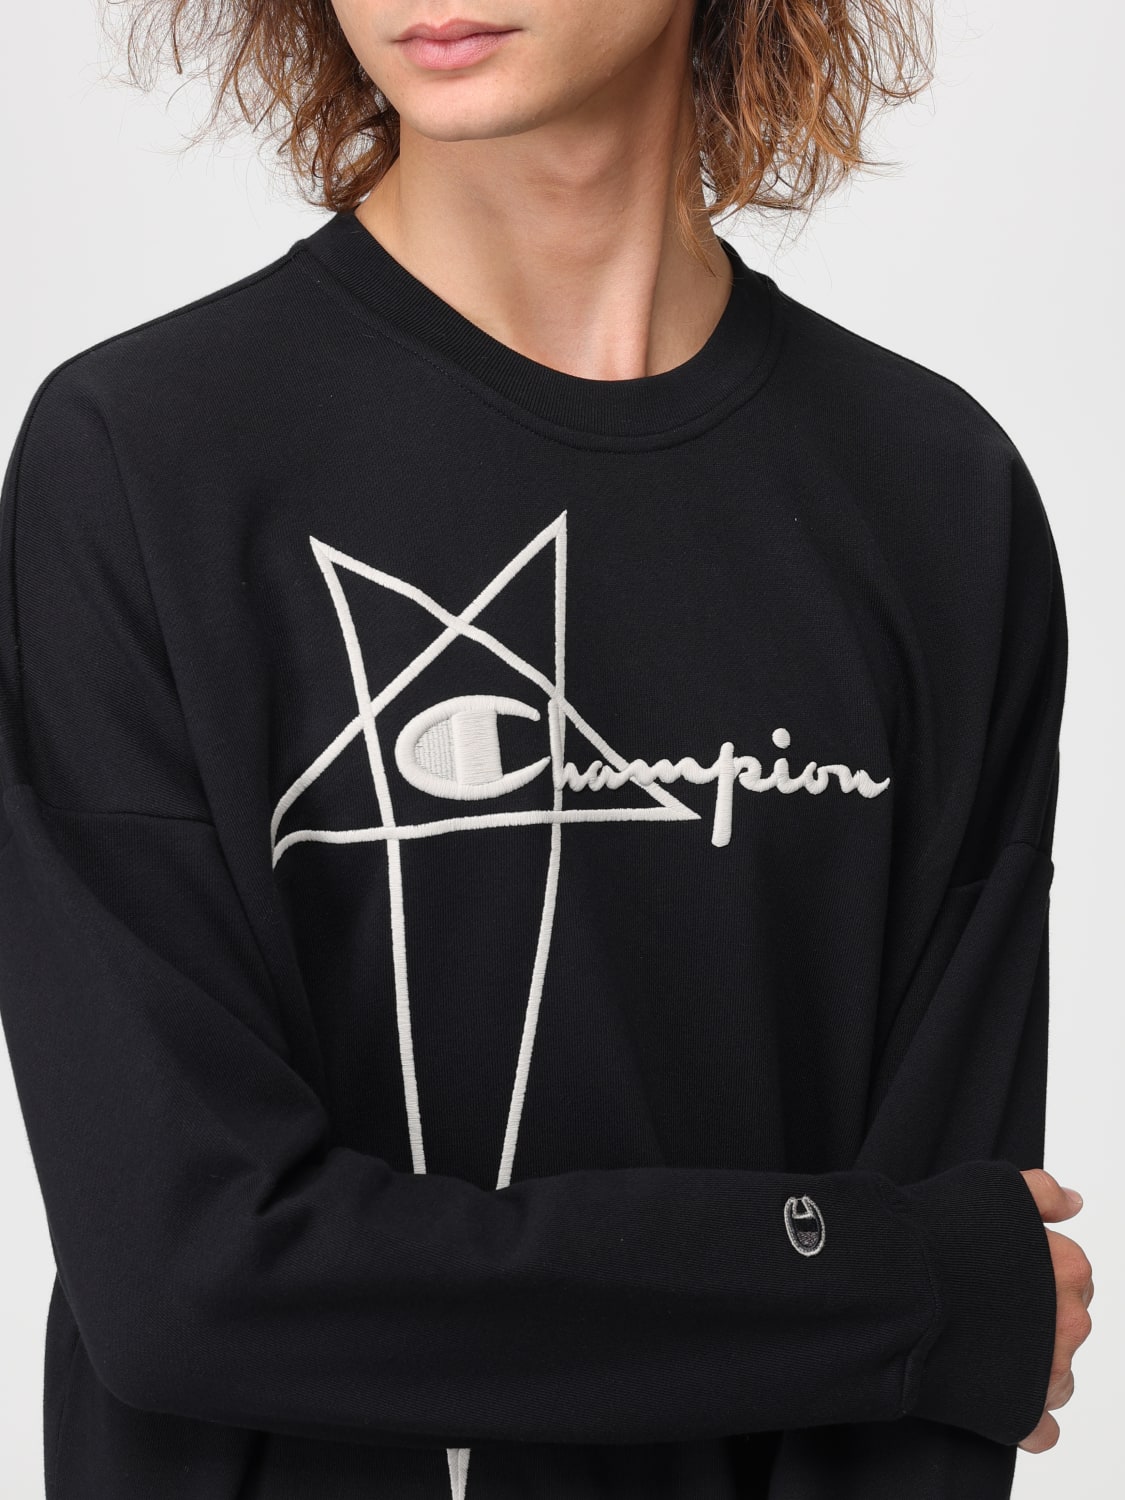 Rick Owens x Champion Women's Flyproof Tunic Sweatshirt in Black